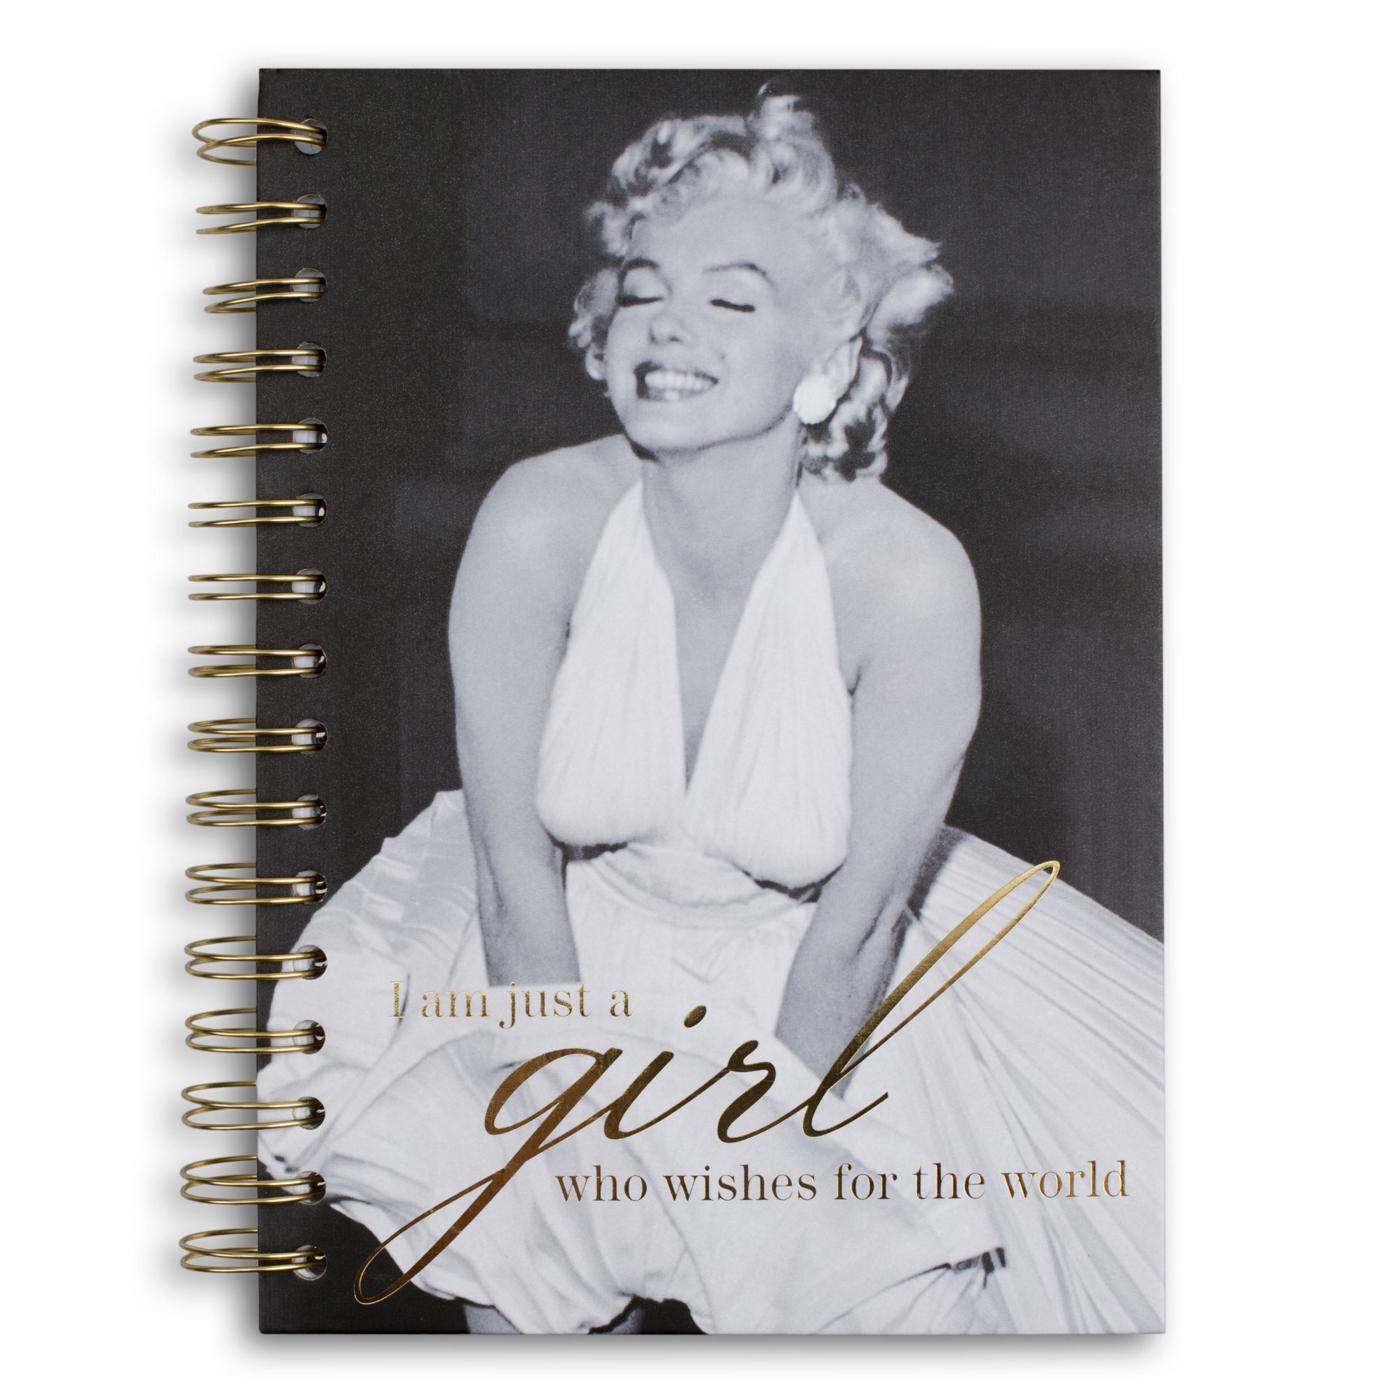 Marilyn Monroe Spiral Notebook Black/white; image 1 of 2